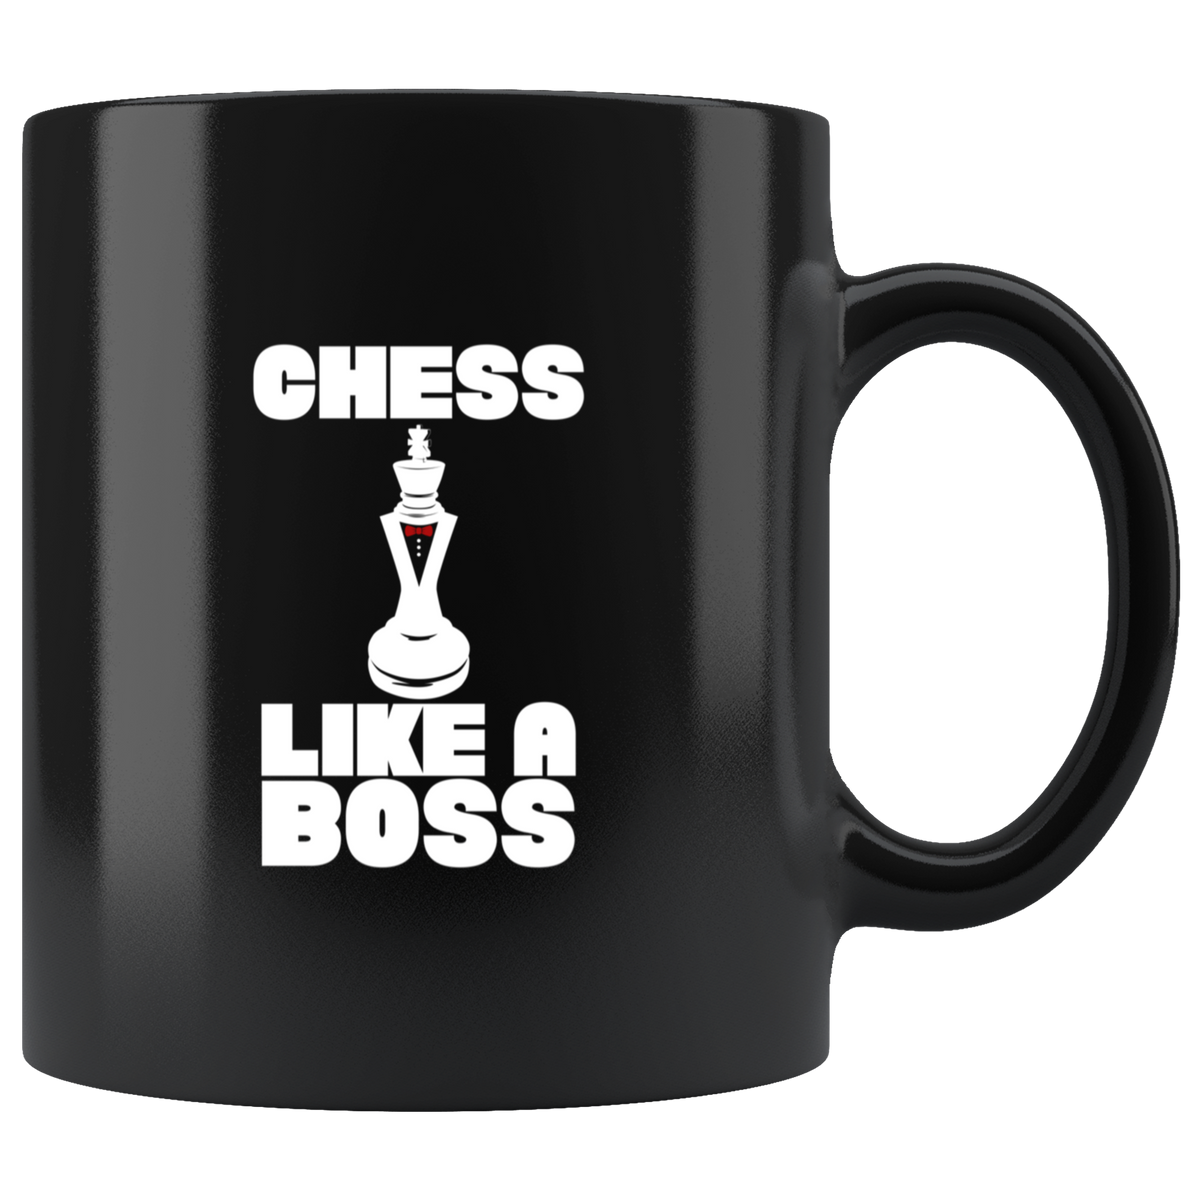 Chess like a Boss - Ceramic Mug